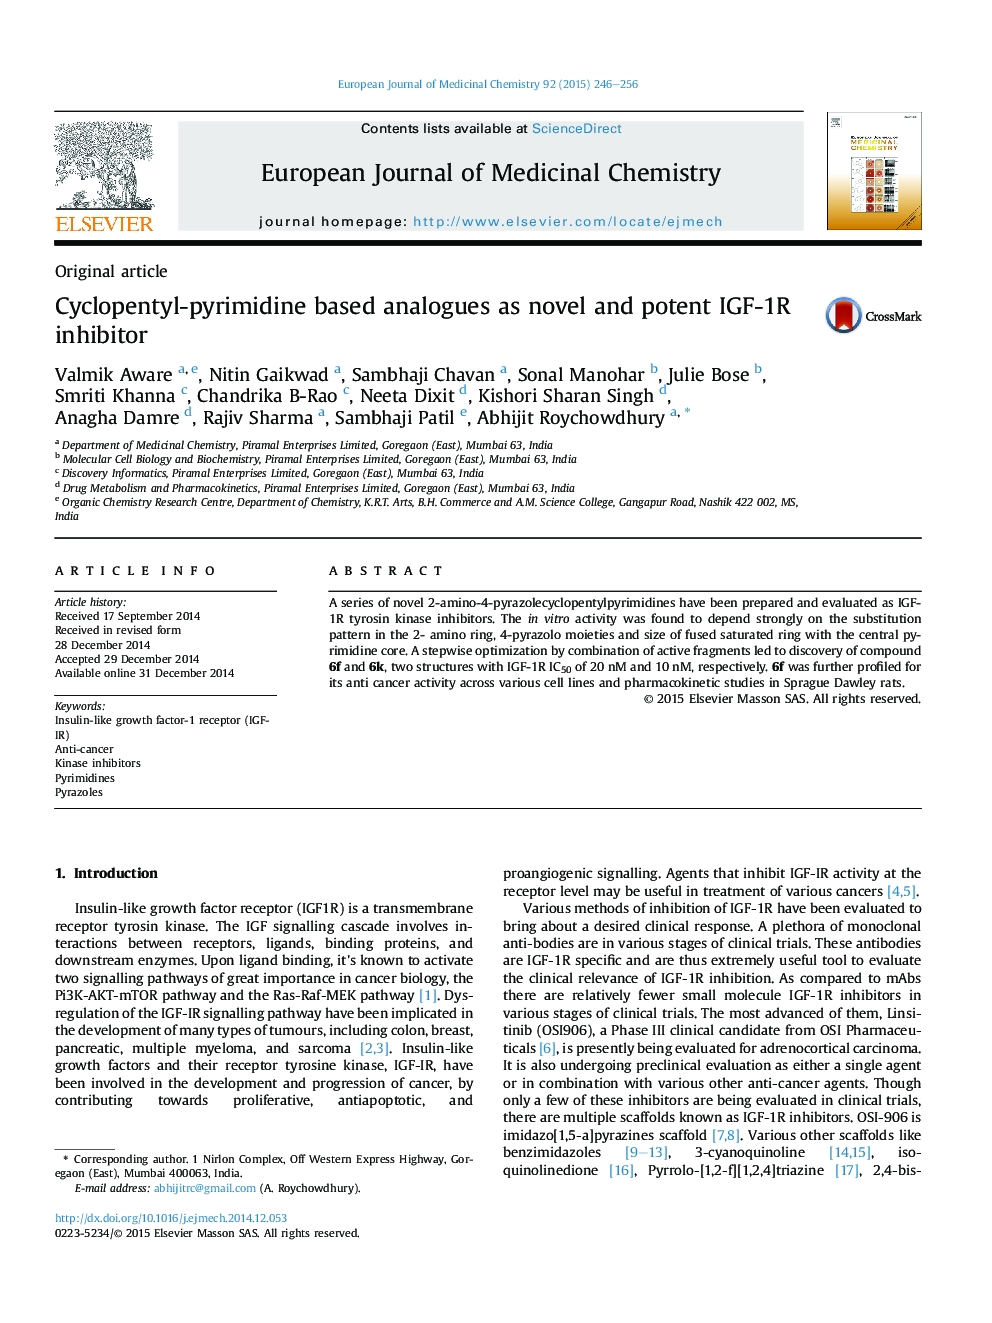 Cyclopentyl-pyrimidine based analogues as novel and potent IGF-1R inhibitor